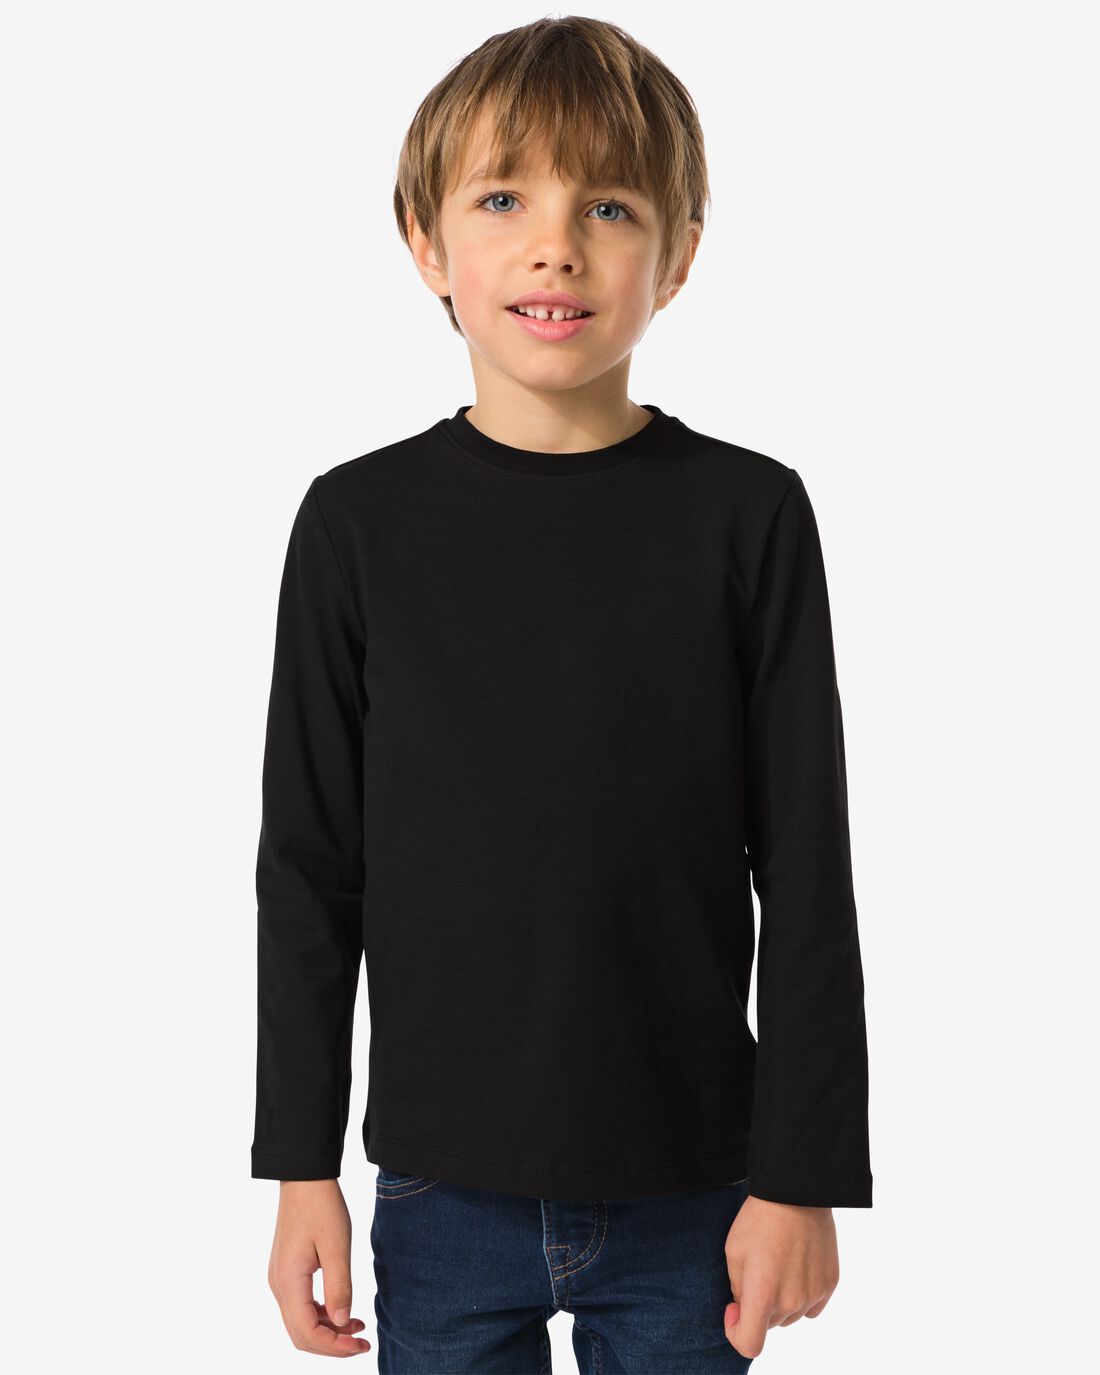 Image of HEMA Kinder T-shirt - Biologisch Katoen Zwart (zwart)